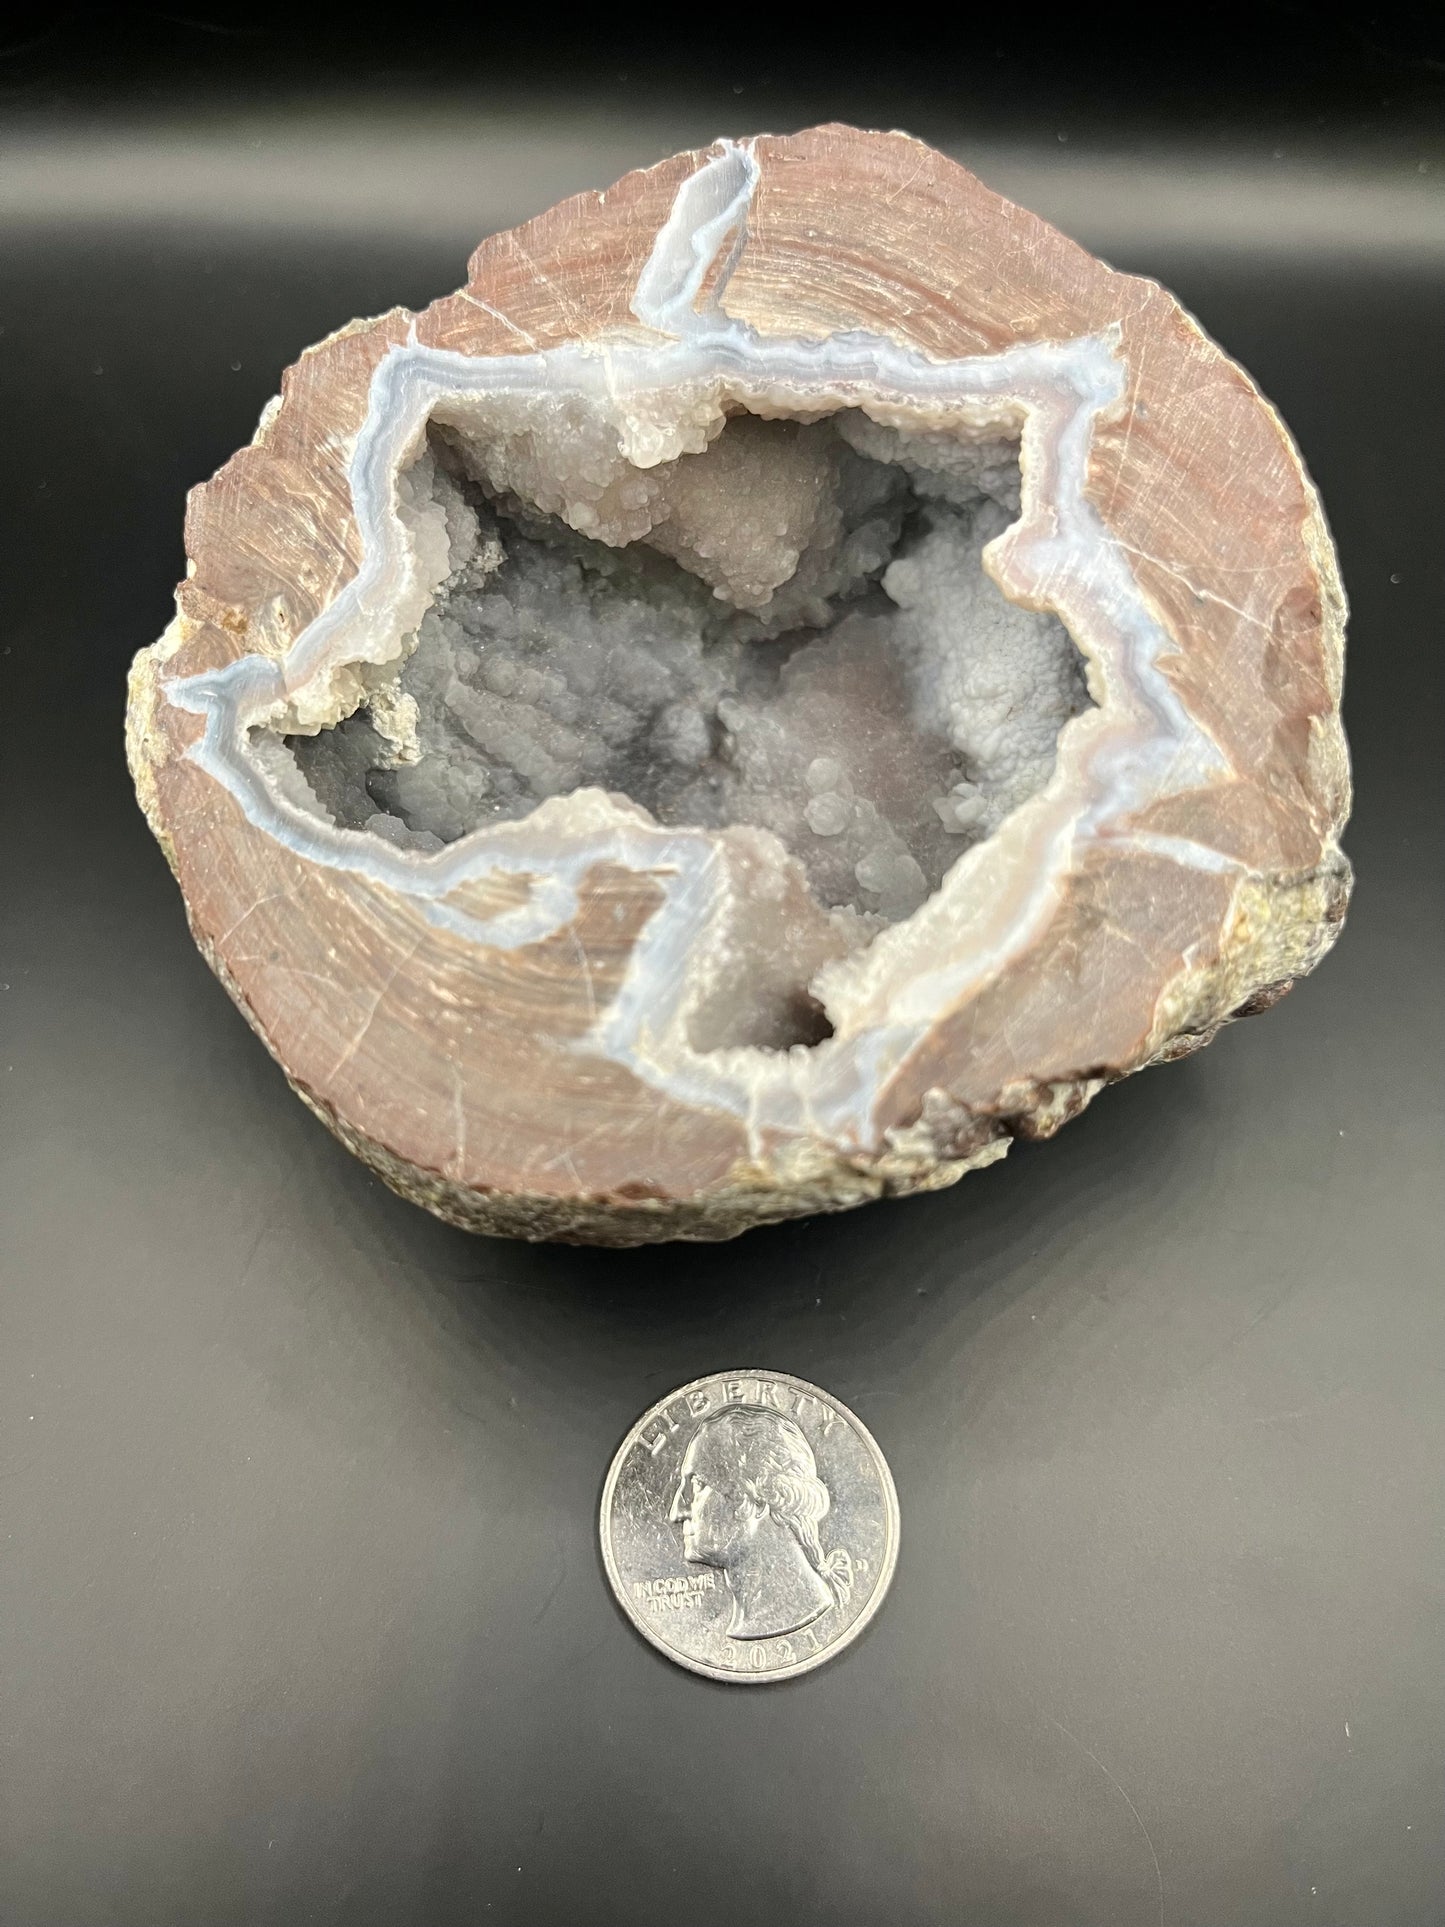 Quartz Agate “Galaxy” Geode